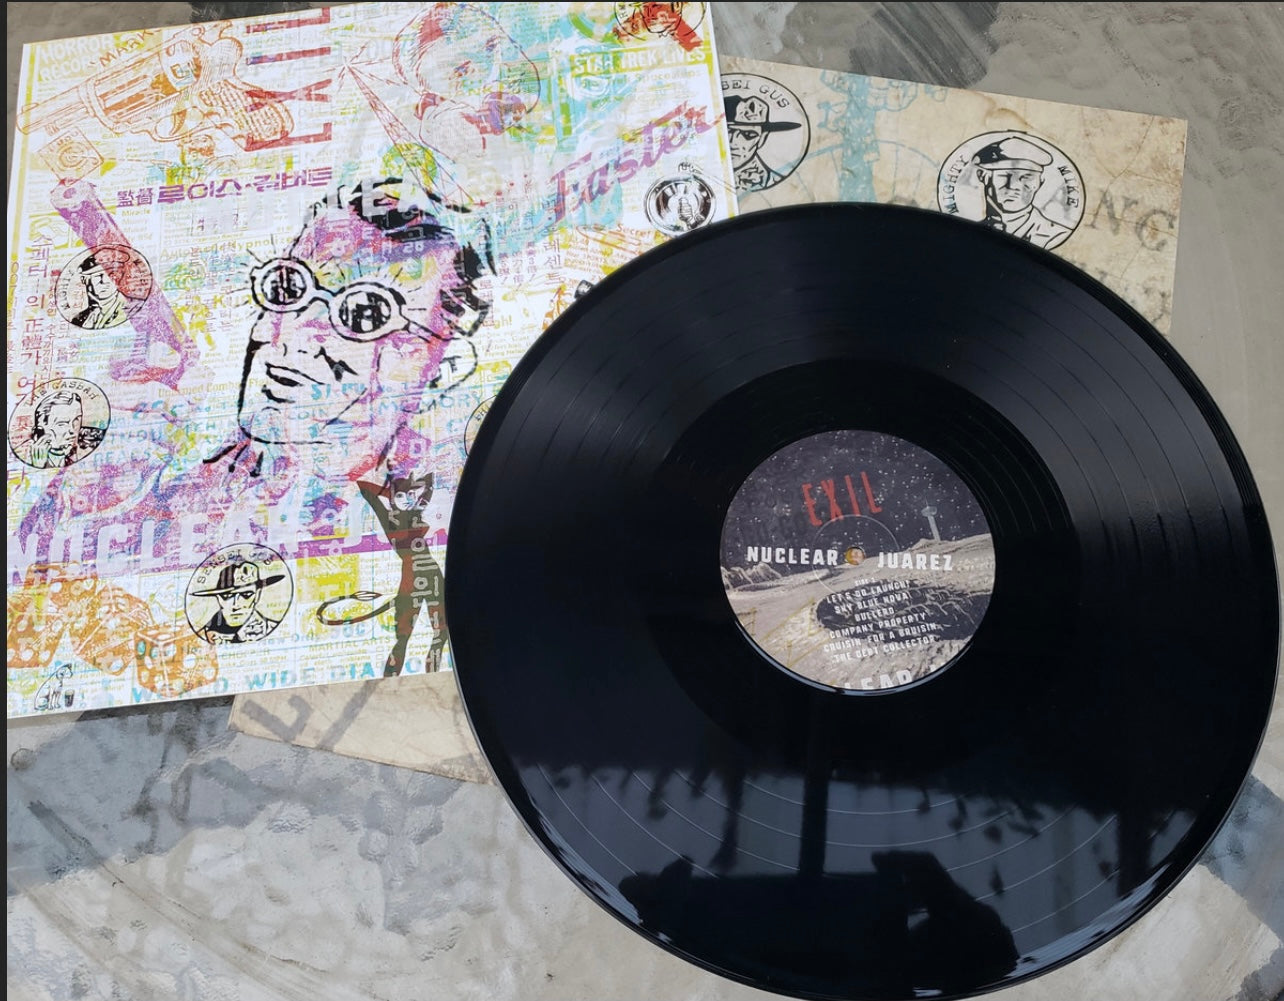 OMRDST-012 Nuclear Juarez “Exil” 12 inch Vinyl LP